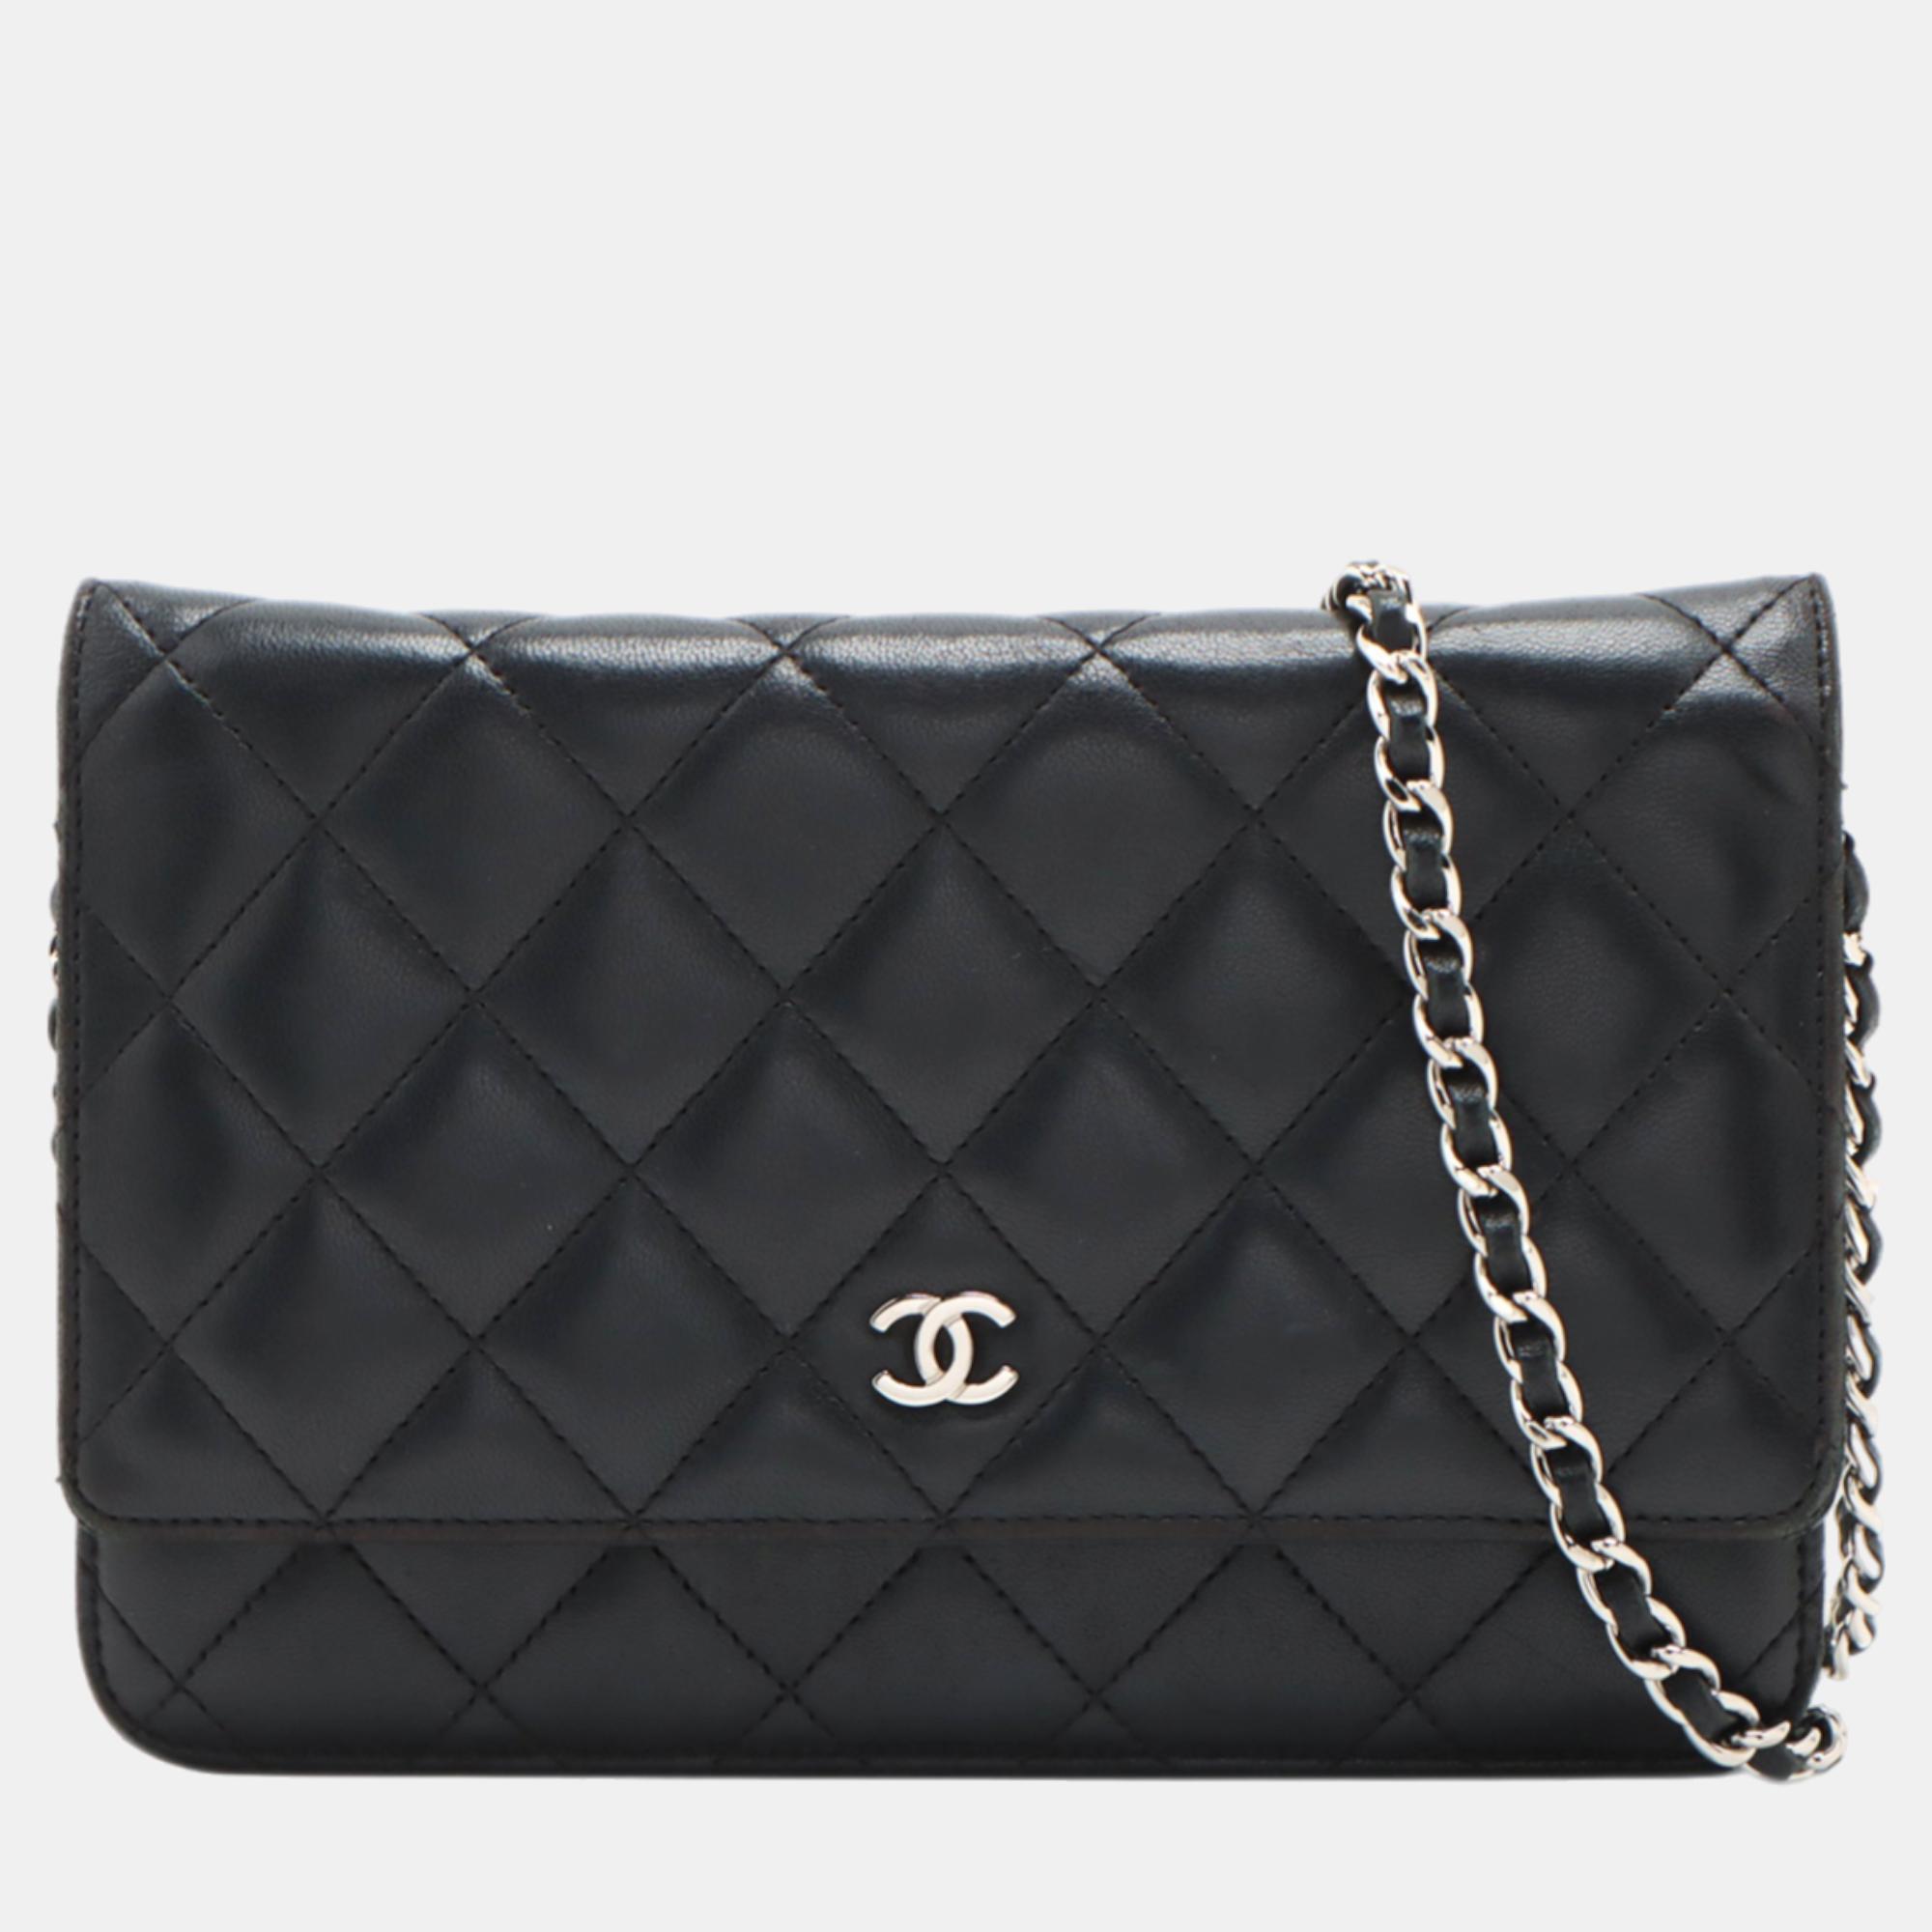 Chanel black cc caviar wallet on chain